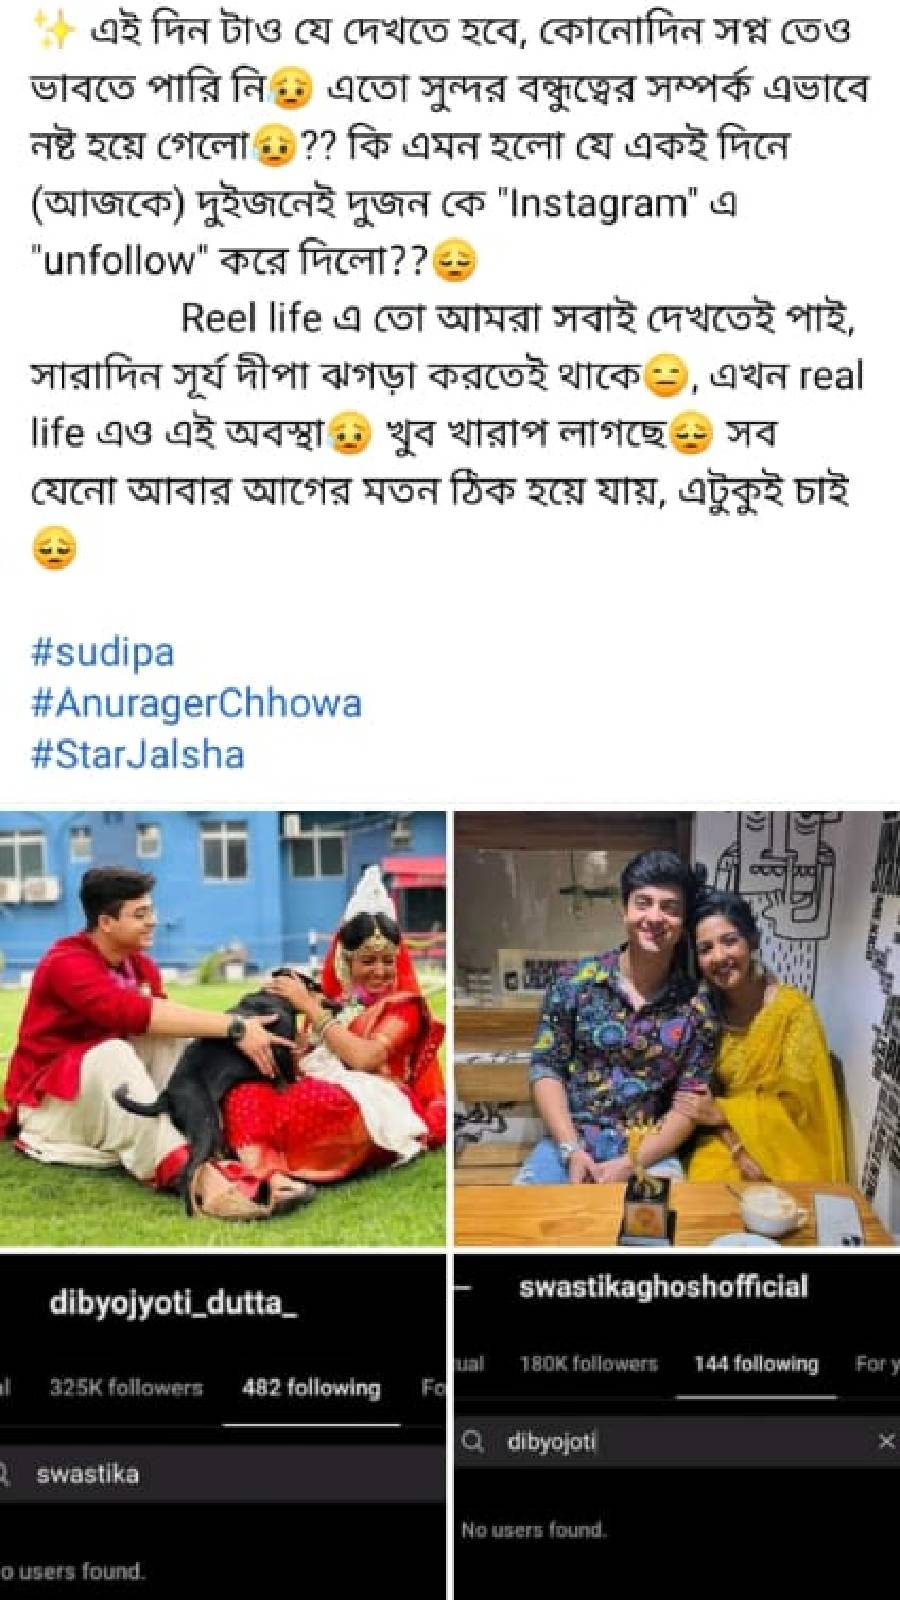 Dibyojyoti Dutta and Swastika Ghosh unfollowed each other on Instagram